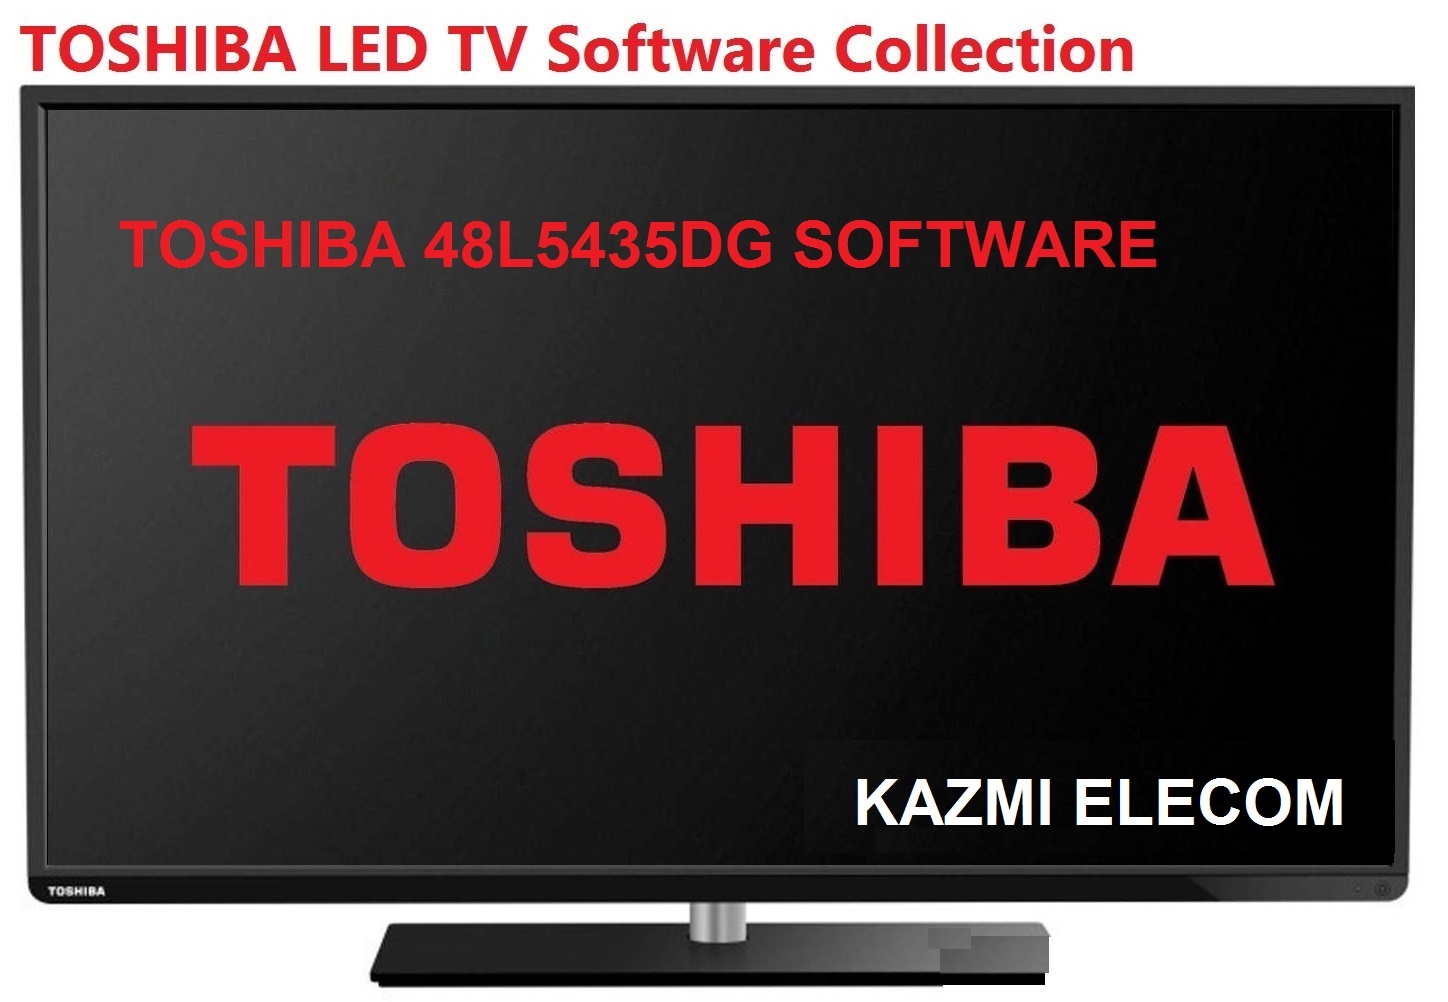 Toshiba 48L5435Dg